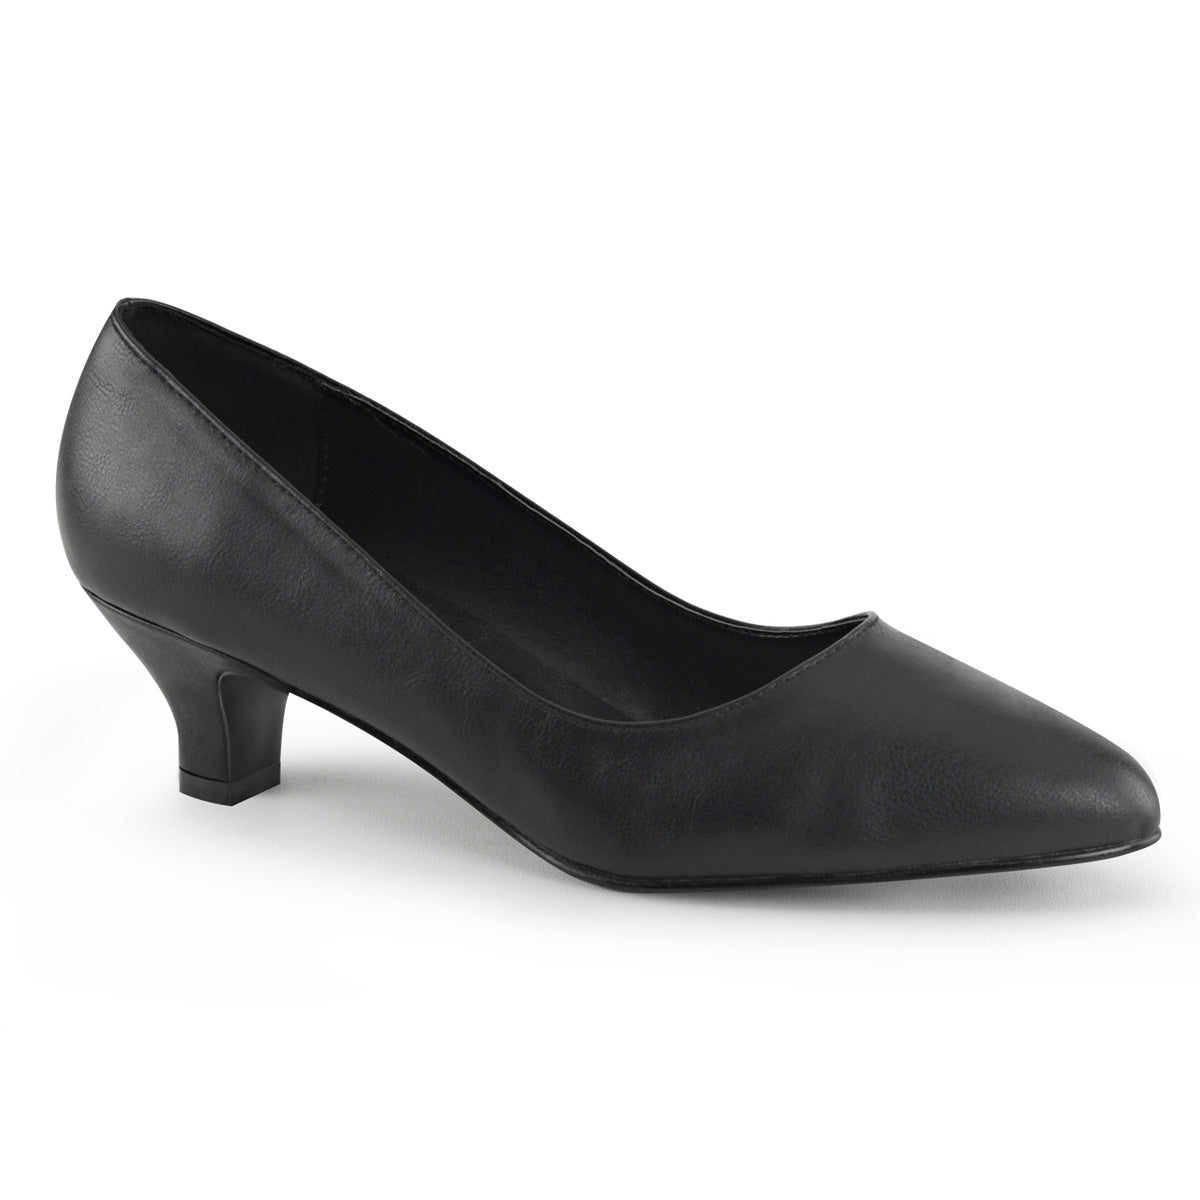 FAB-420 Pleaser Large Size Ladies Shoes 2 Inch Heel Black Fetish Footwear